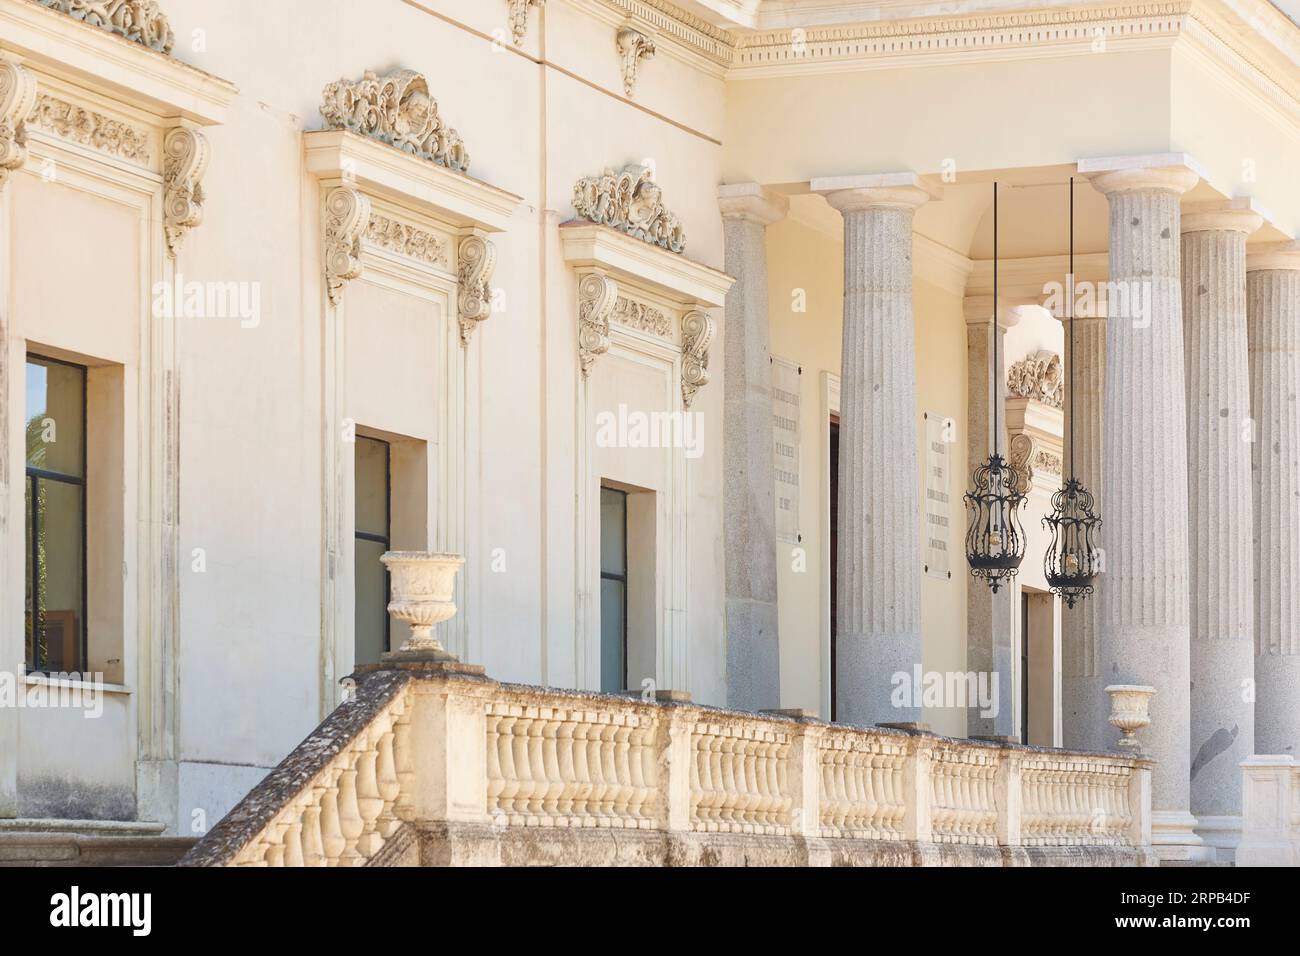 Historic Vista Alegre garden palace. New palace entrance. Madrid, Spain Stock Photo